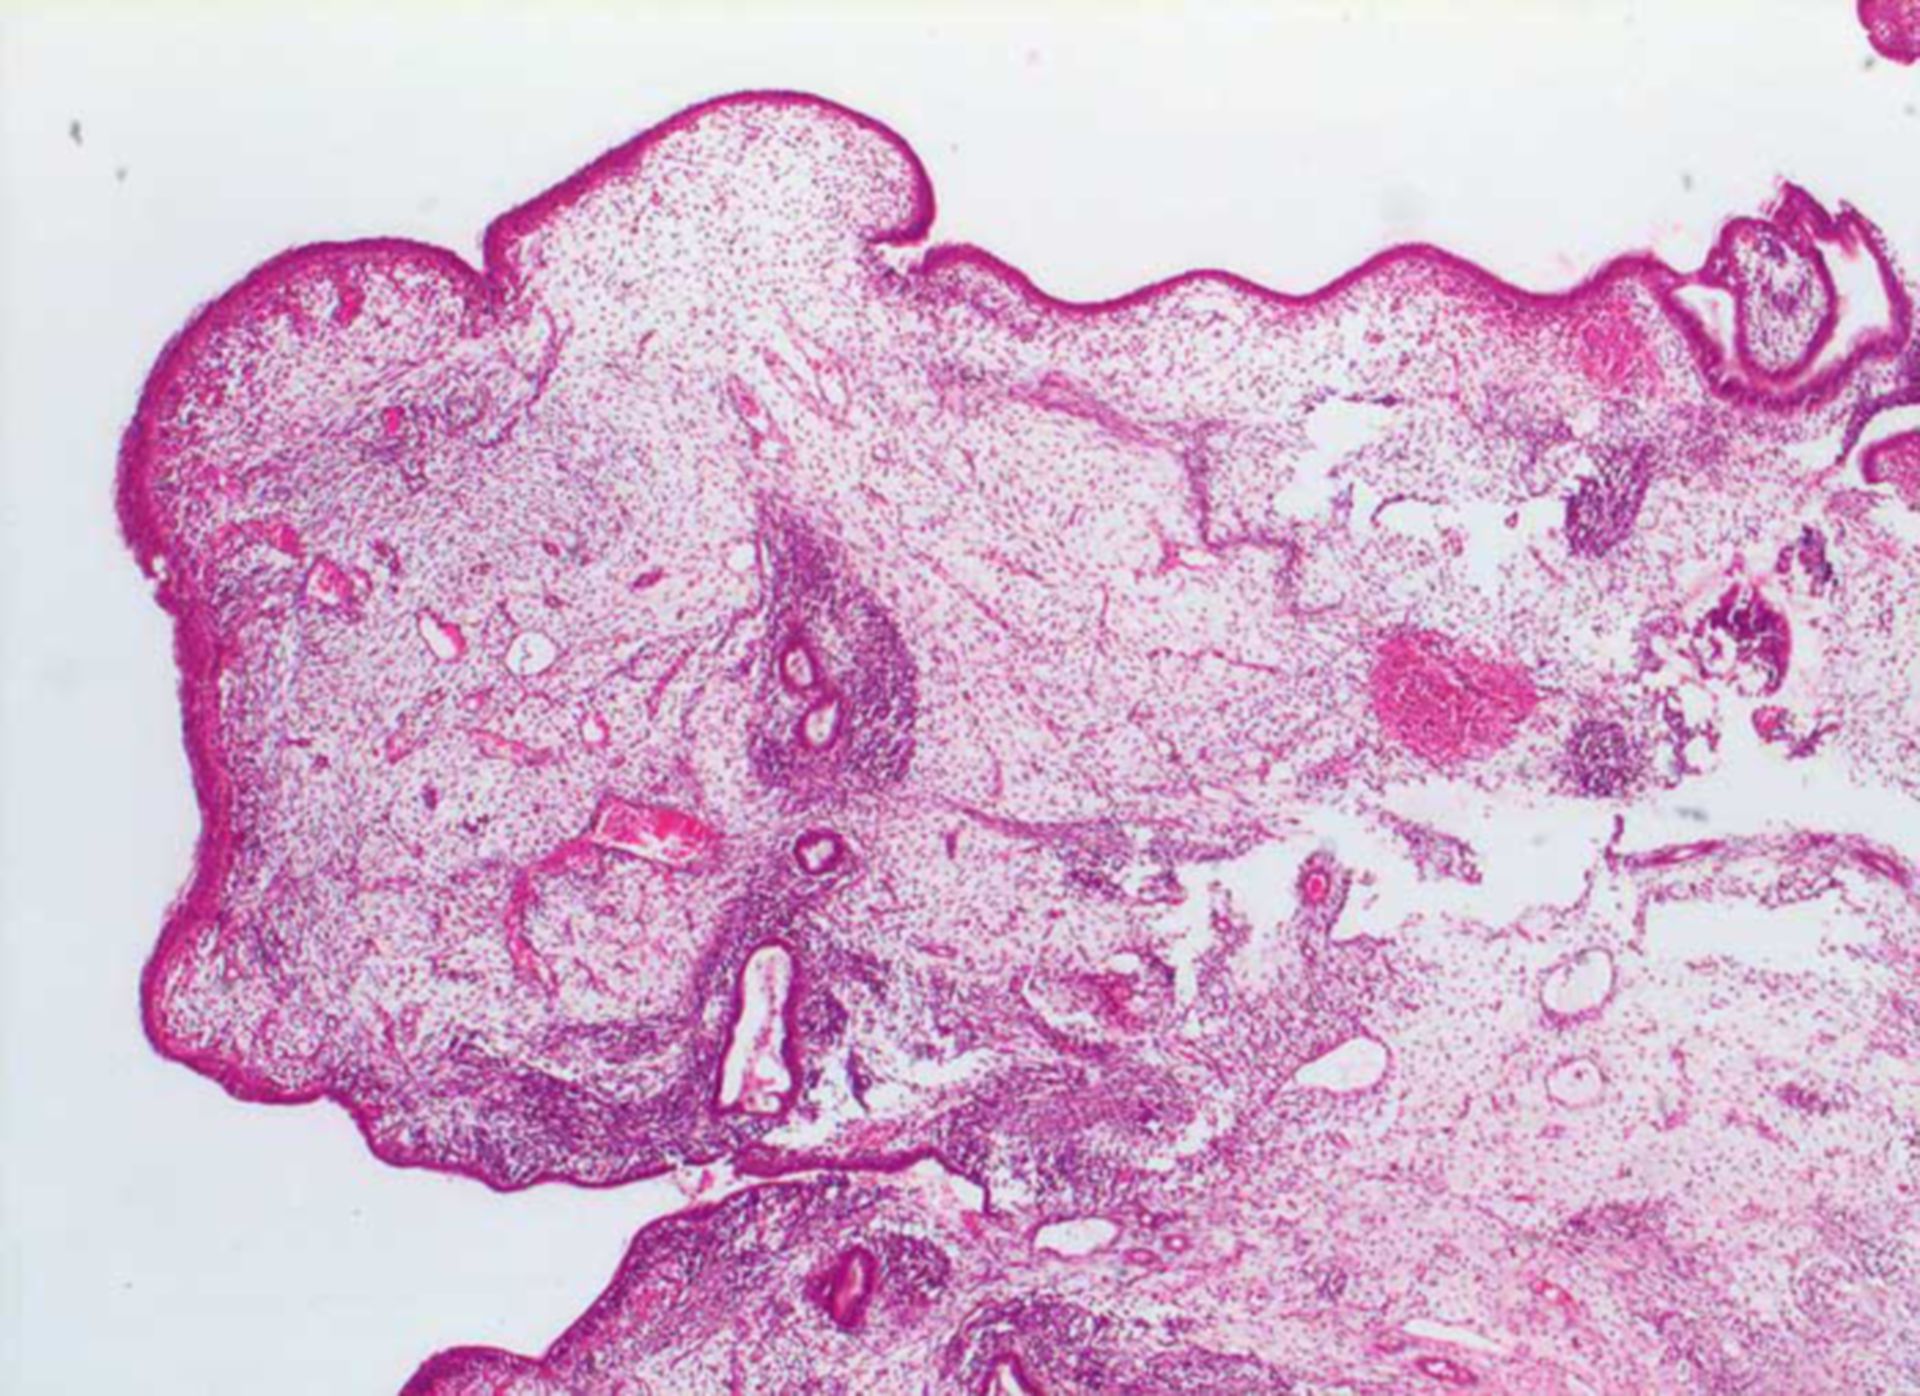 Botryoid sarcoma of the vagina